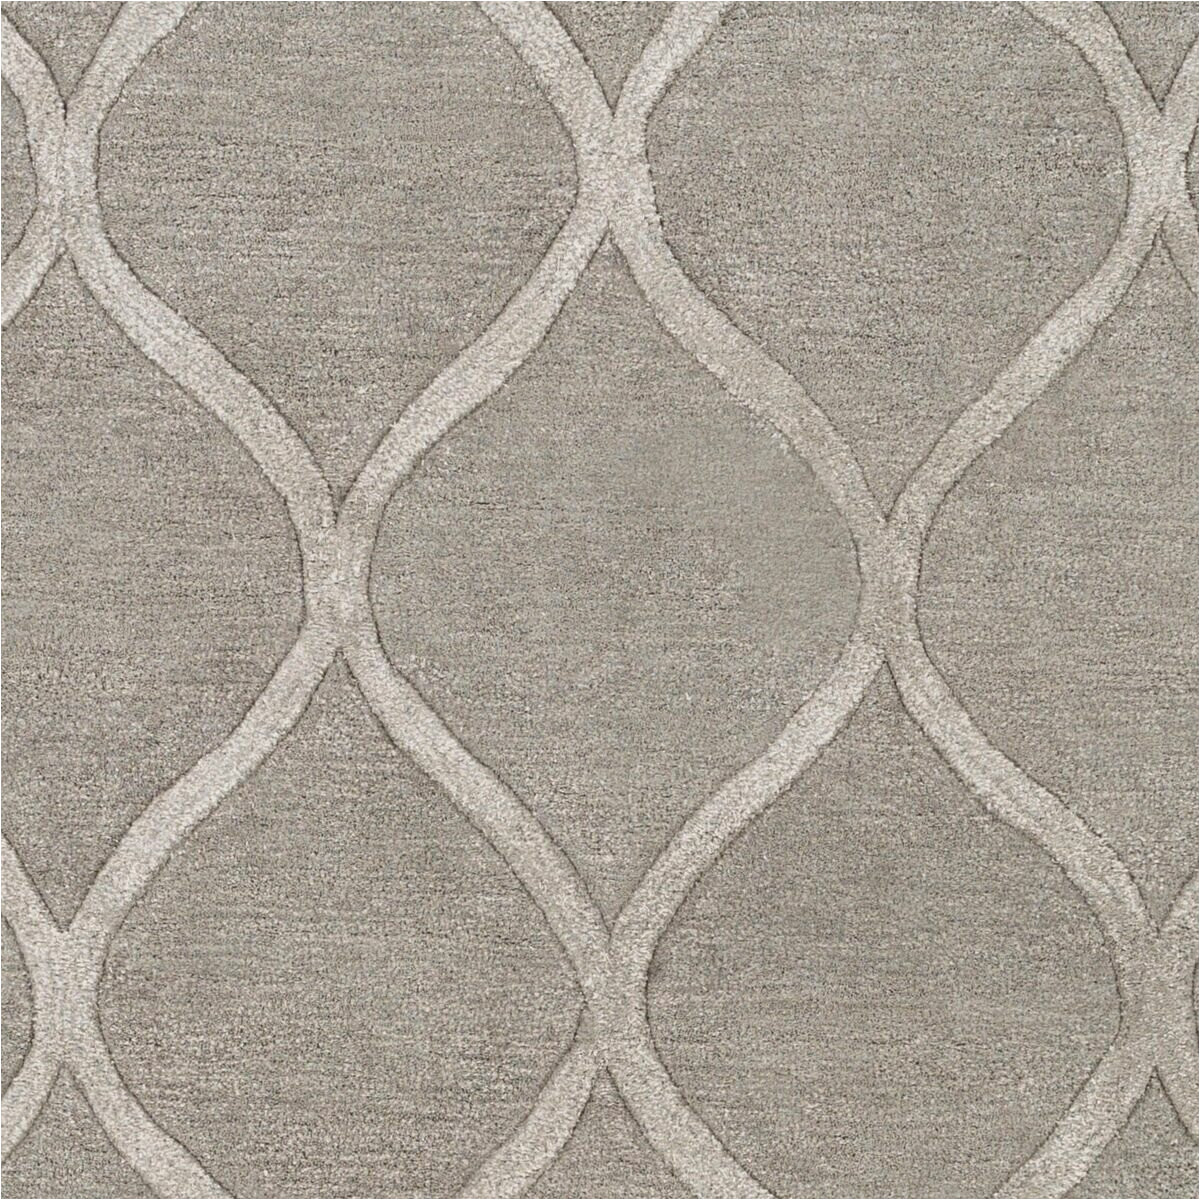 urban cassidy hand tufted gray gray area rug awub2157 fya1535